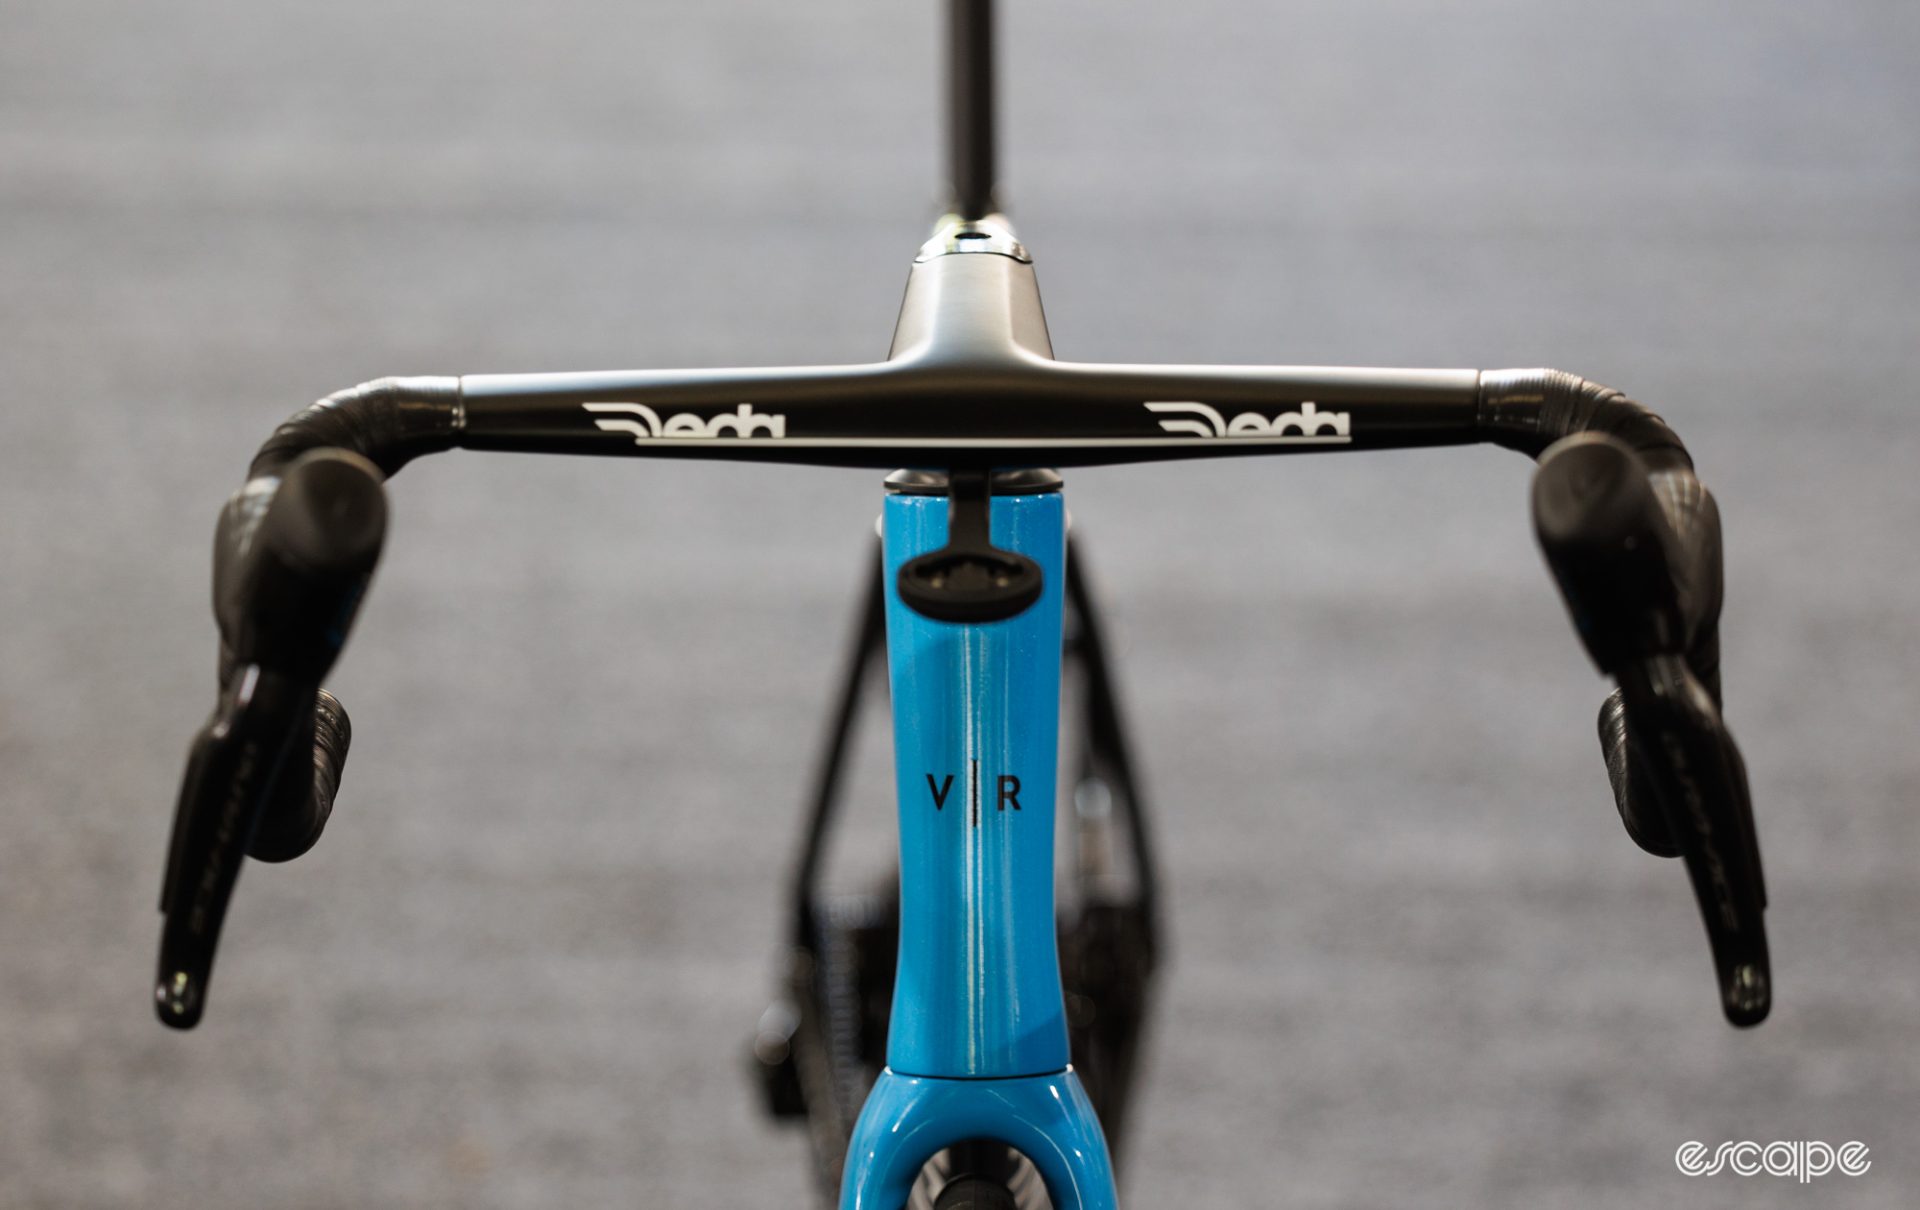 The photo shows the Deda handlebars on Decathlon - AG2R La Mondiale's new Van Rysel RCR bike.